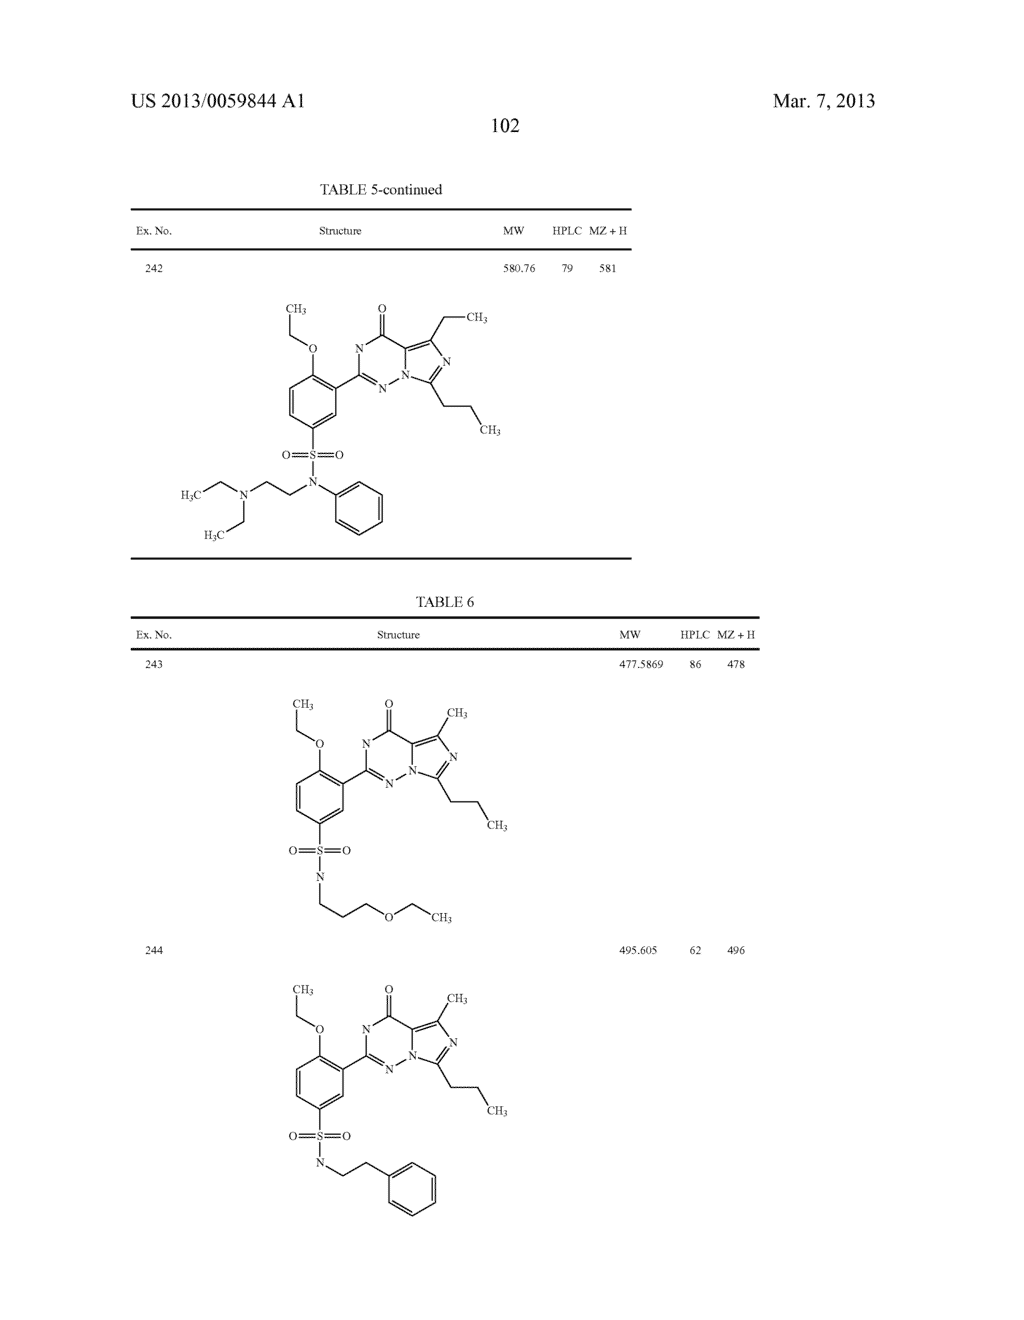 2-PHENYL SUBSTITUTED IMIDAZOTRIAZINONES AS PHOSPHODIESTERASE INHIBITORS - diagram, schematic, and image 103